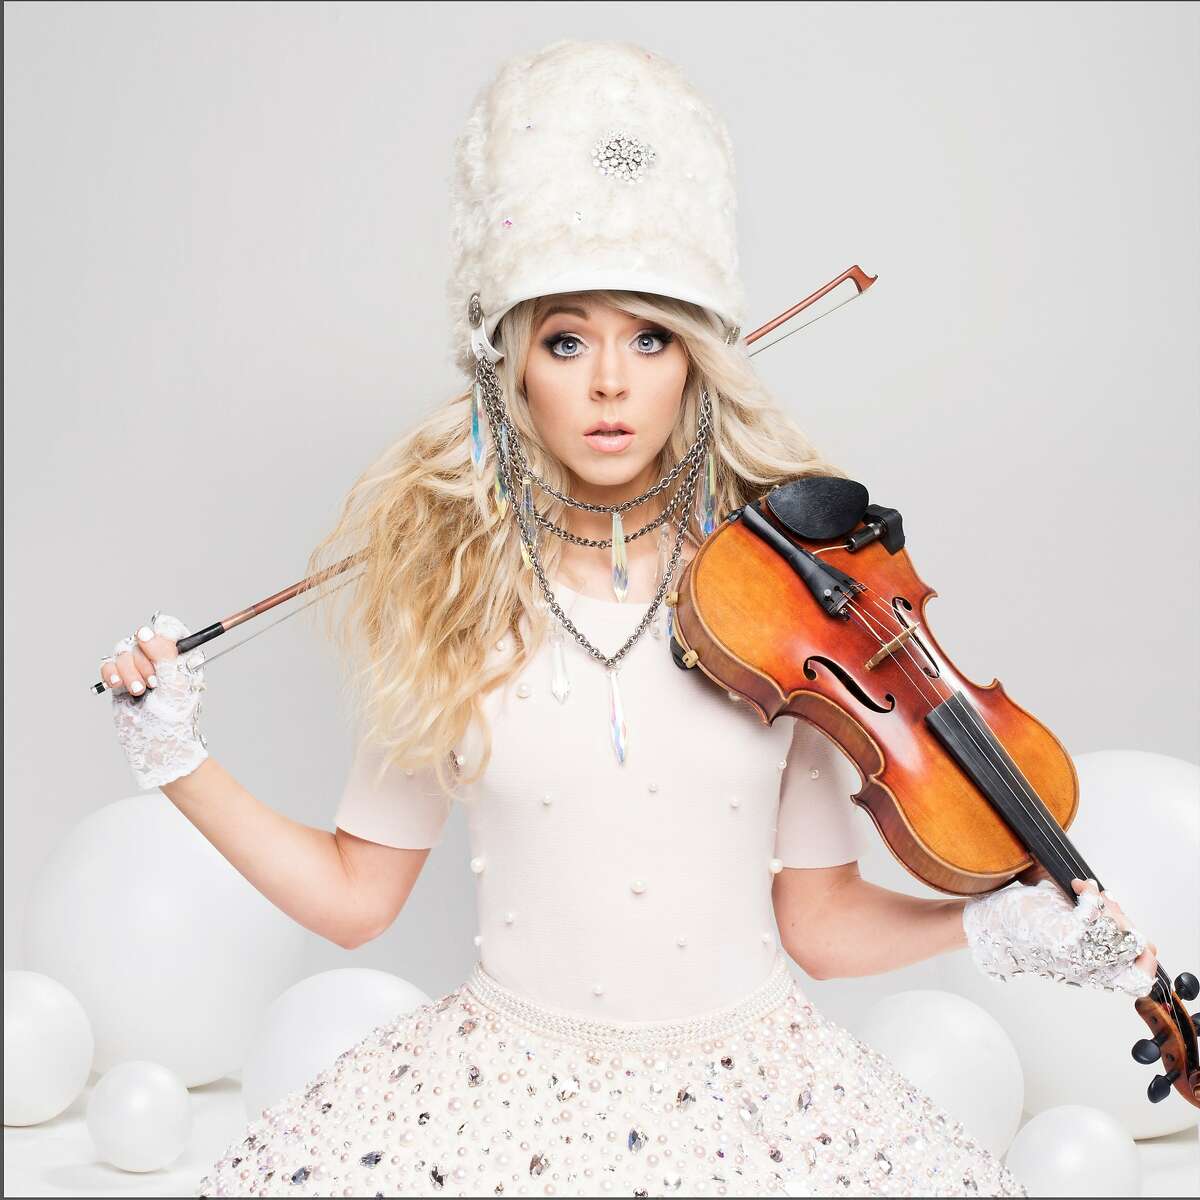 Violinist and YouTube star Lindsey Stirling